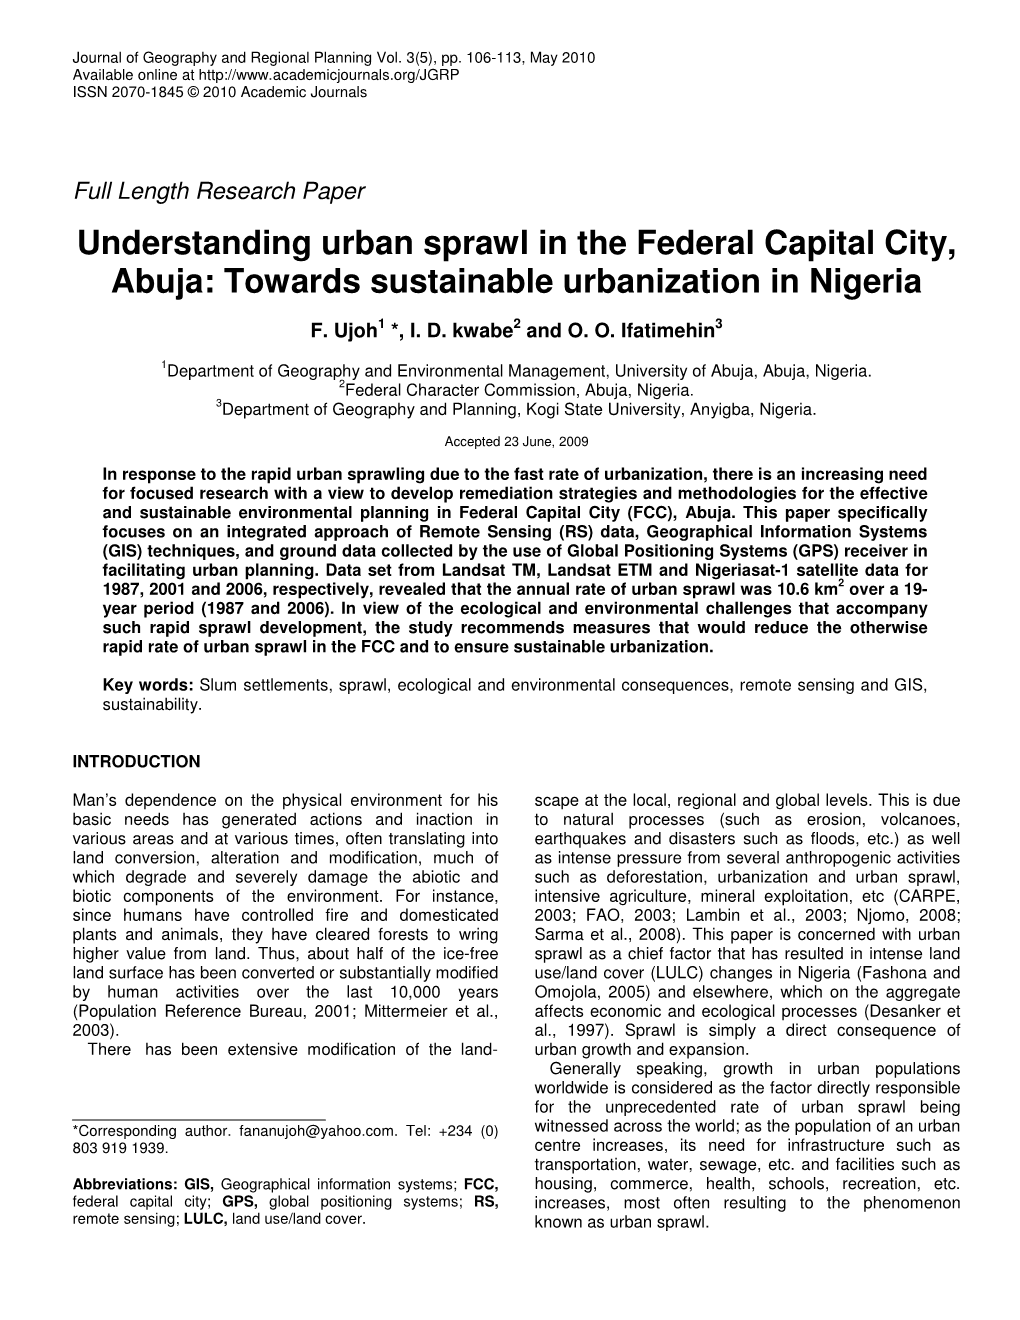 Understanding Urban Sprawl in the Federal Capital City, Abuja: Towards Sustainable Urbanization in Nigeria